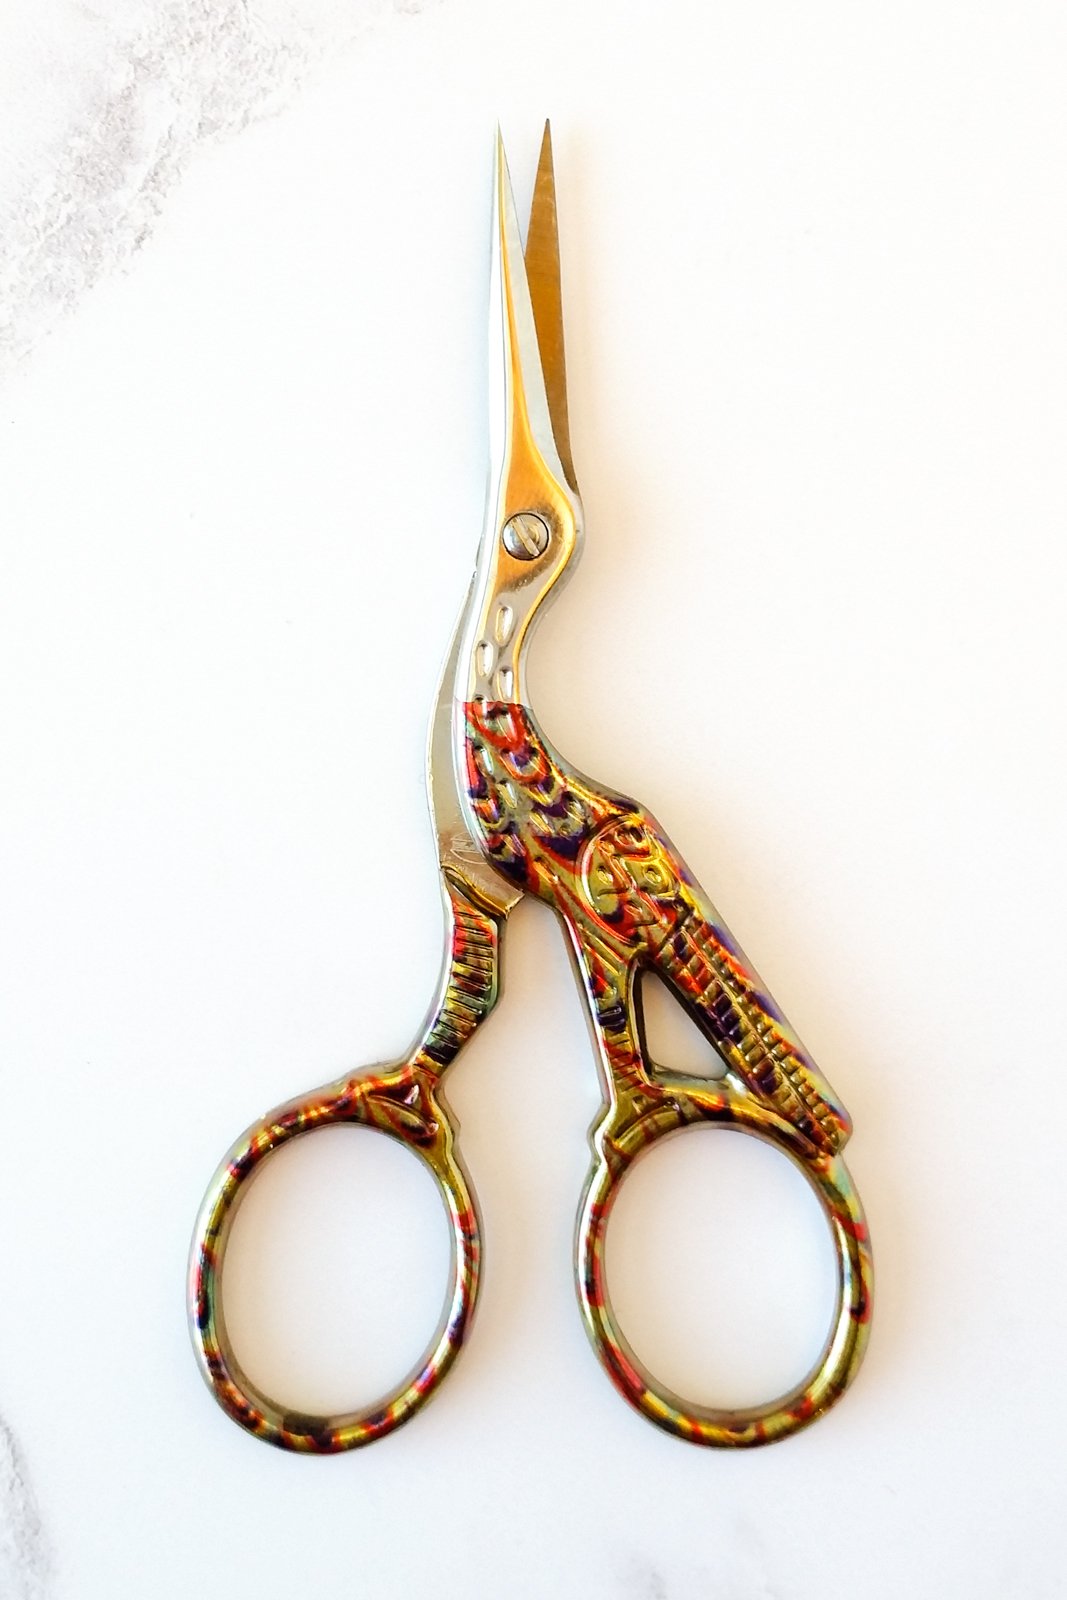 Metallic stork embroidery scissors